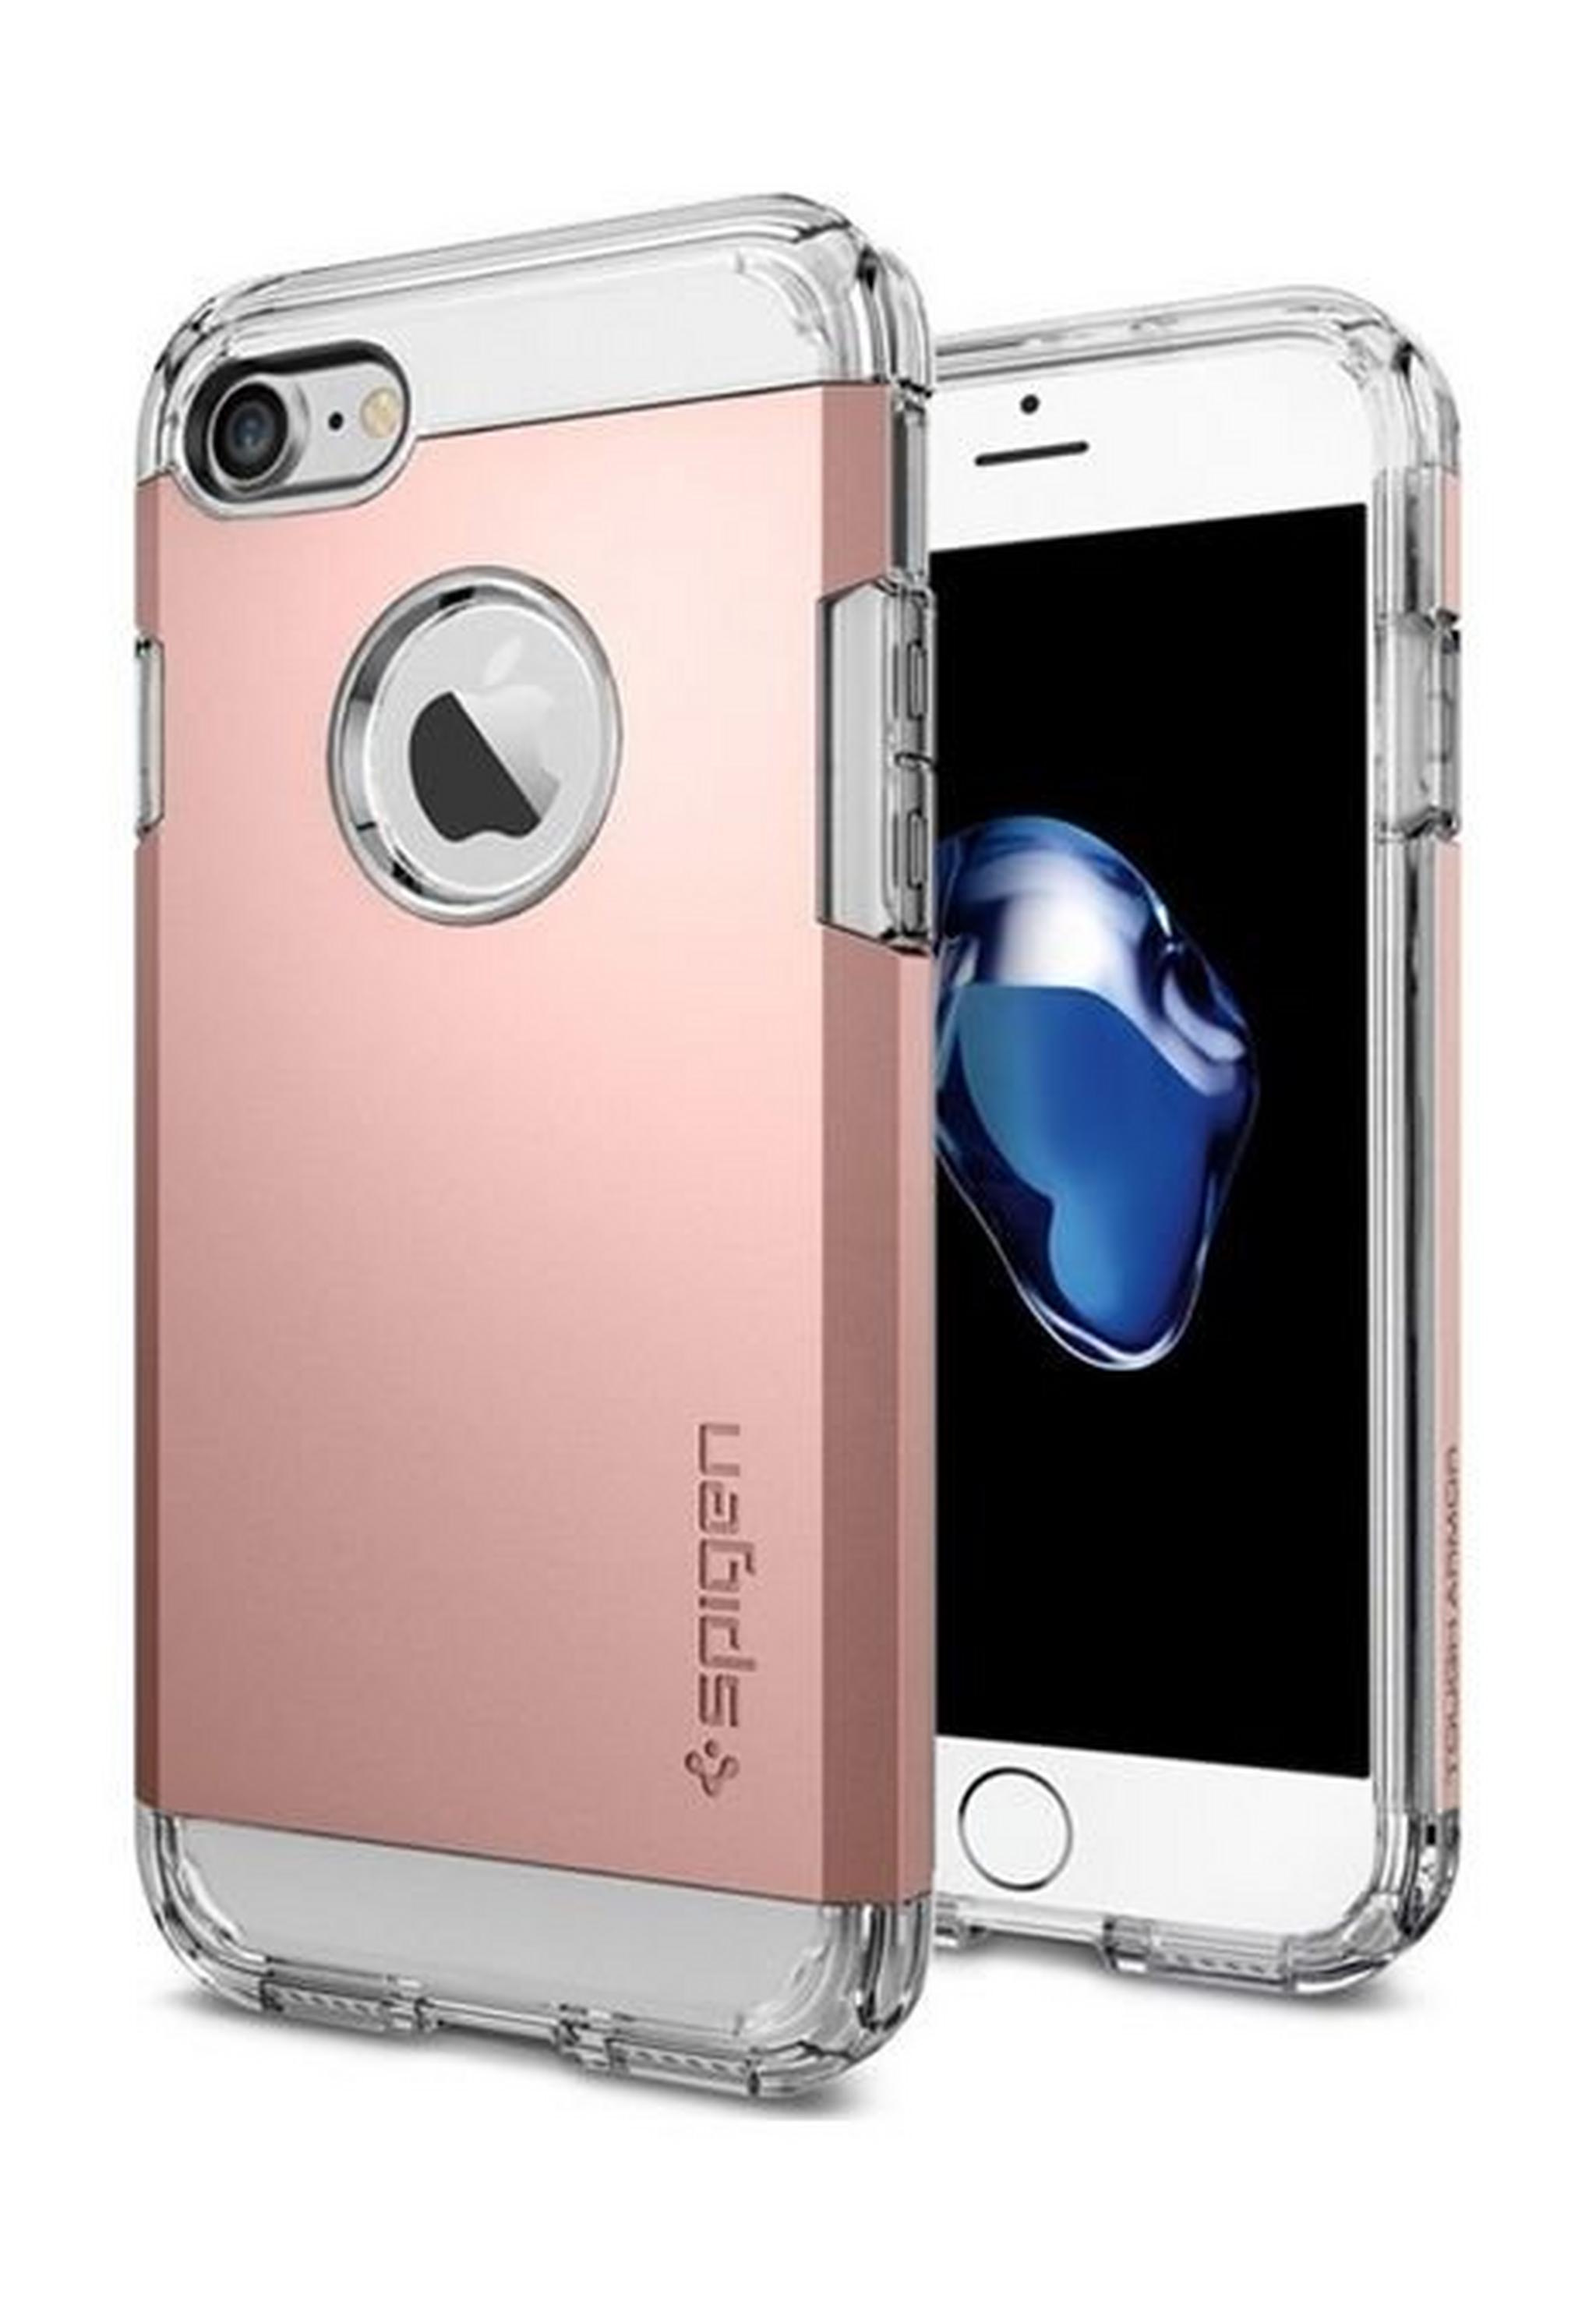 Spigen Tough Armor Protective Case for iPhone 7 - Rose Gold